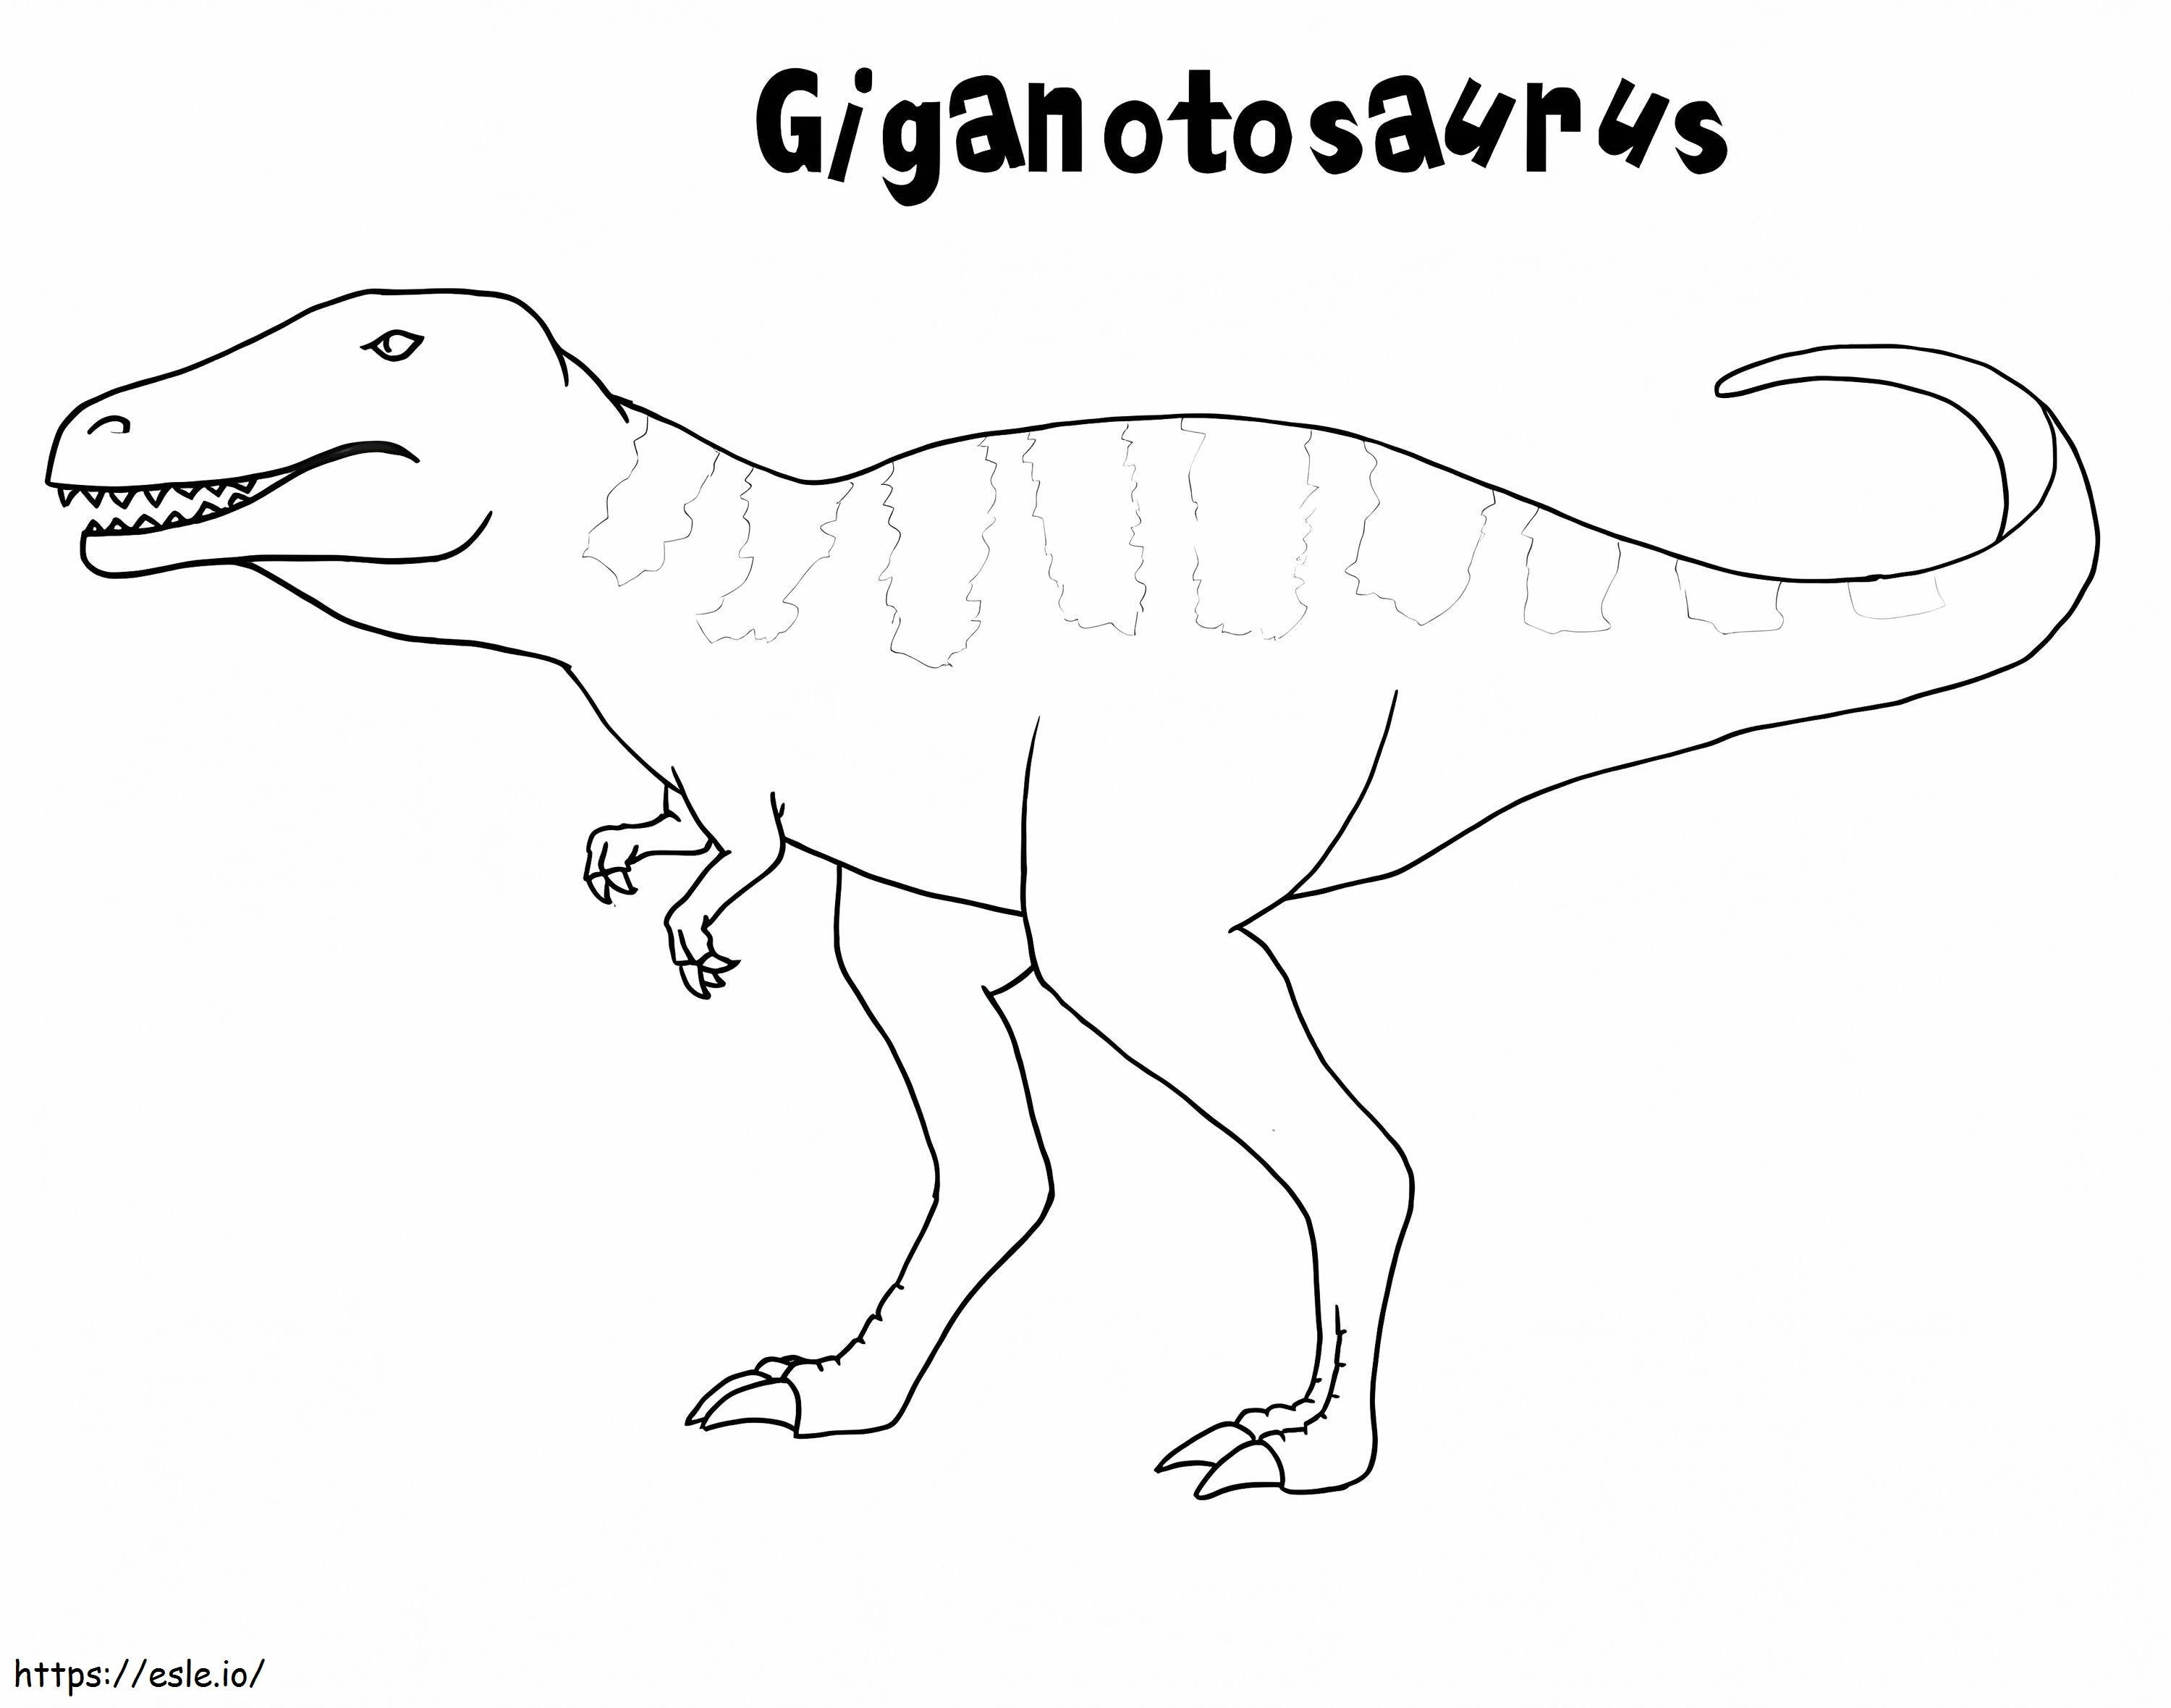 Giganotosauro fácil para colorir